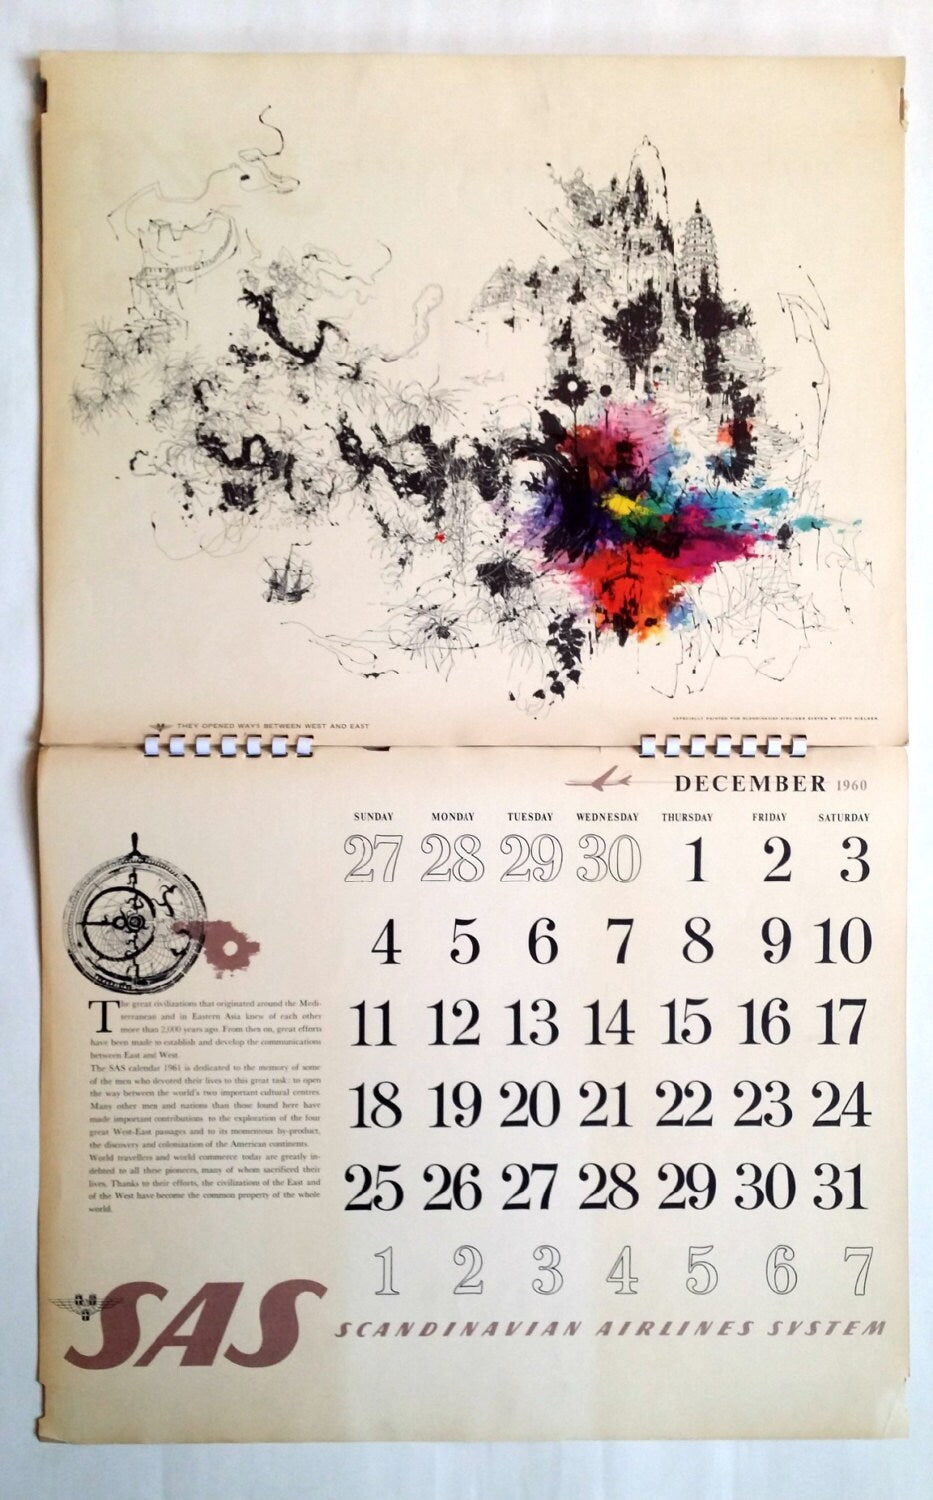 1961 SAS Airlines Calendar by Otto Nielsen - Original Vintage Calendar